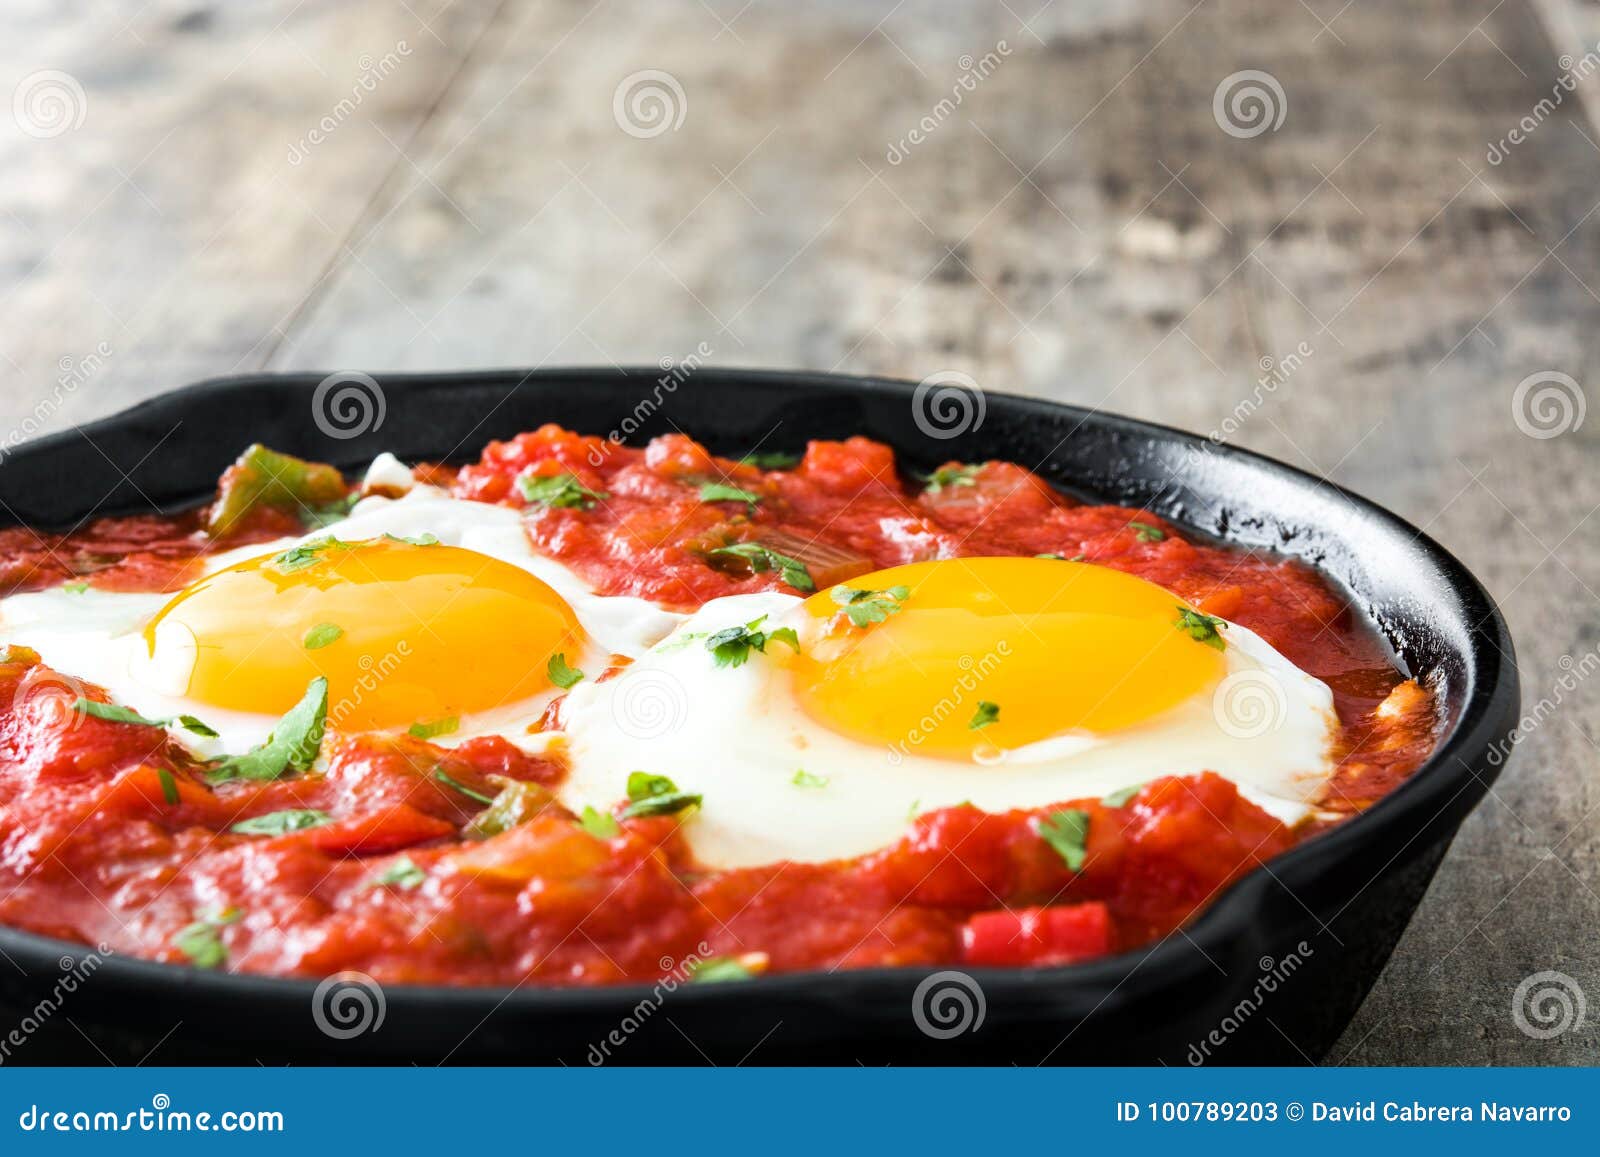 mexican breakfast: huevos rancheros in iron frying pan on wood